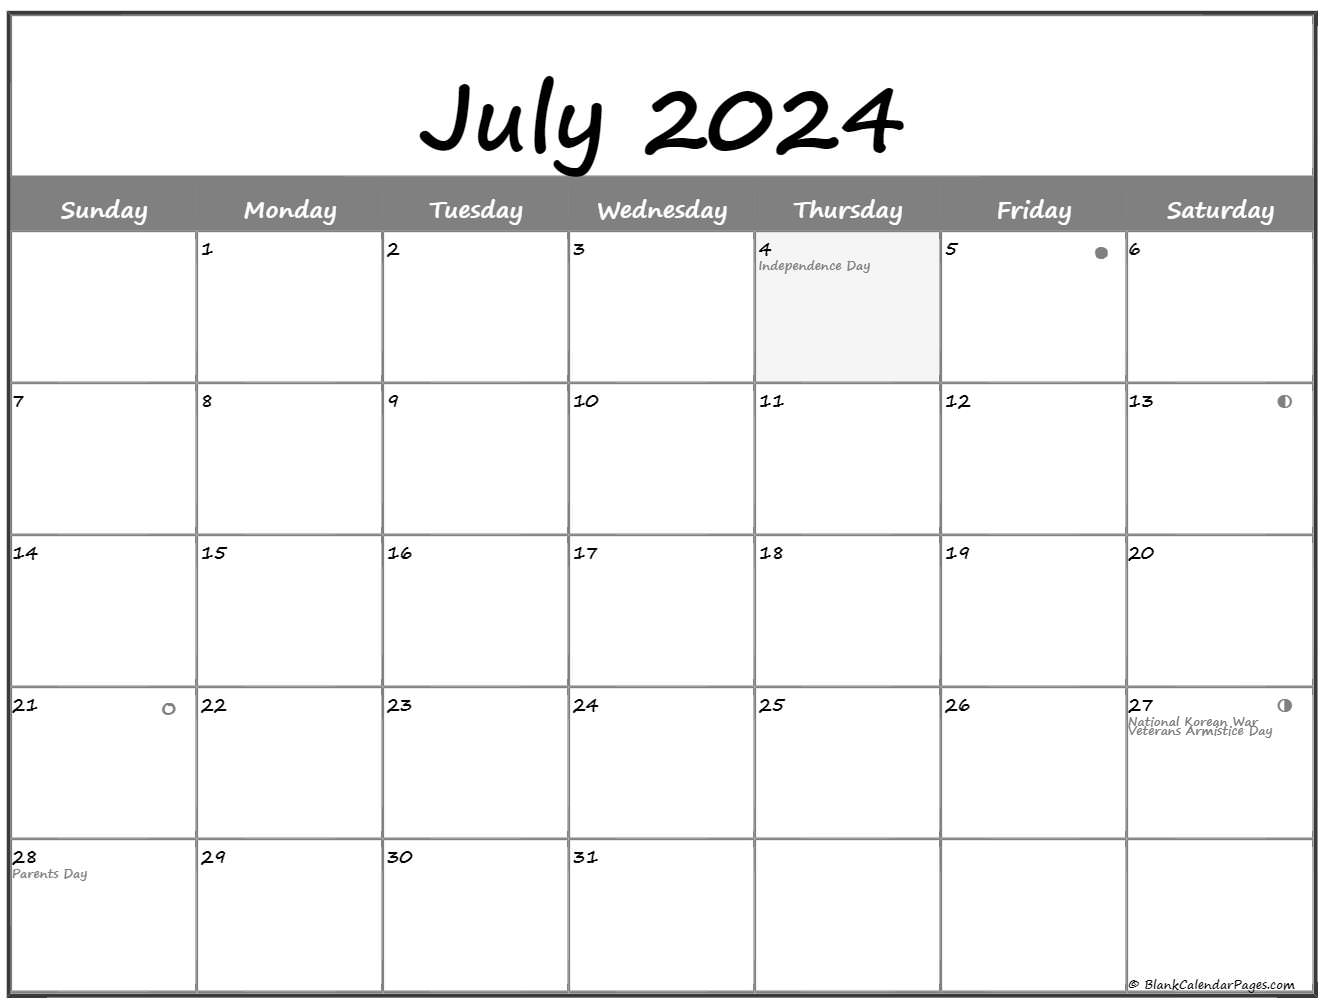 July 2024 Lunar Calendar Moon Phase Calendar